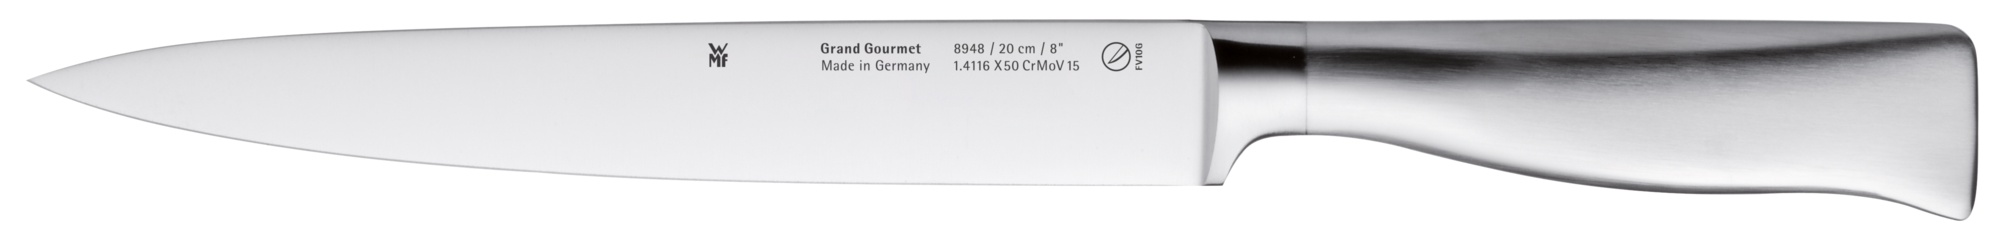 Bild Grand Gourmet Fleischmesser 20 cm 